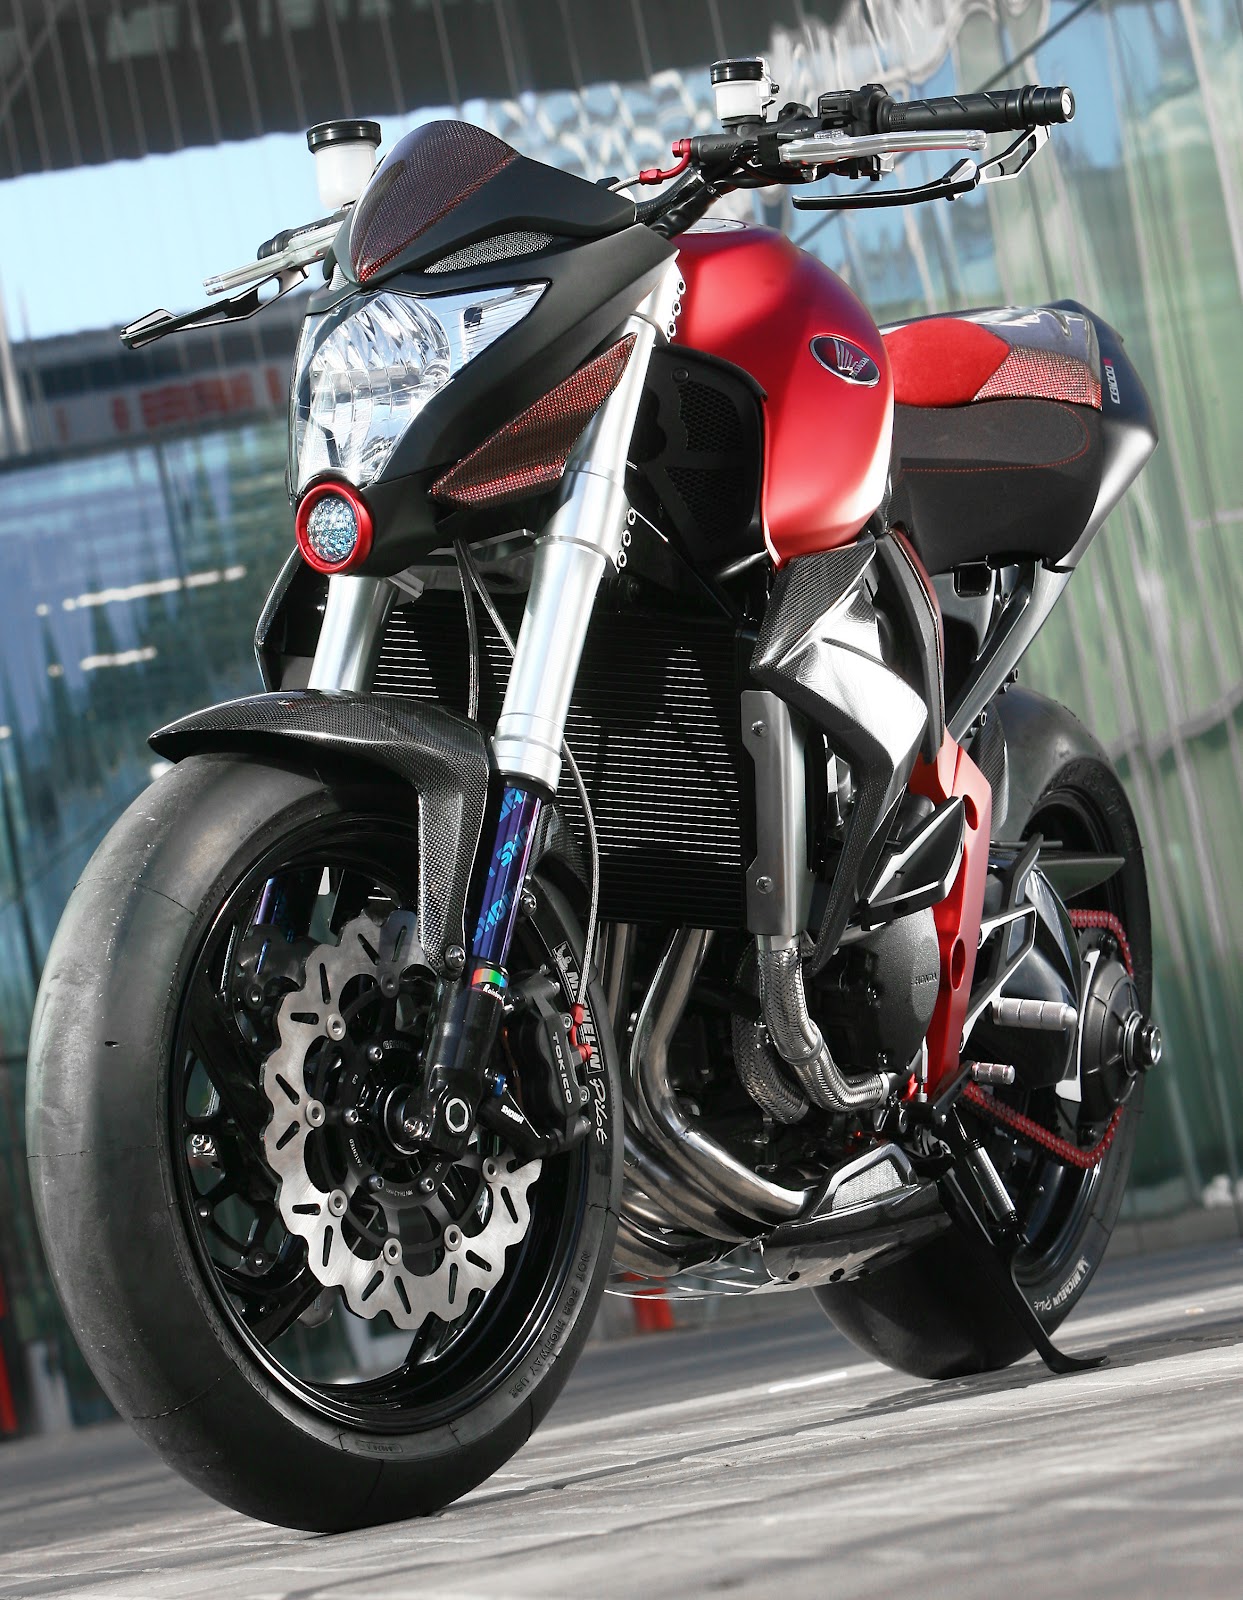 Honda CB1000r | HD Wallpapers (High Definition) | Free ...